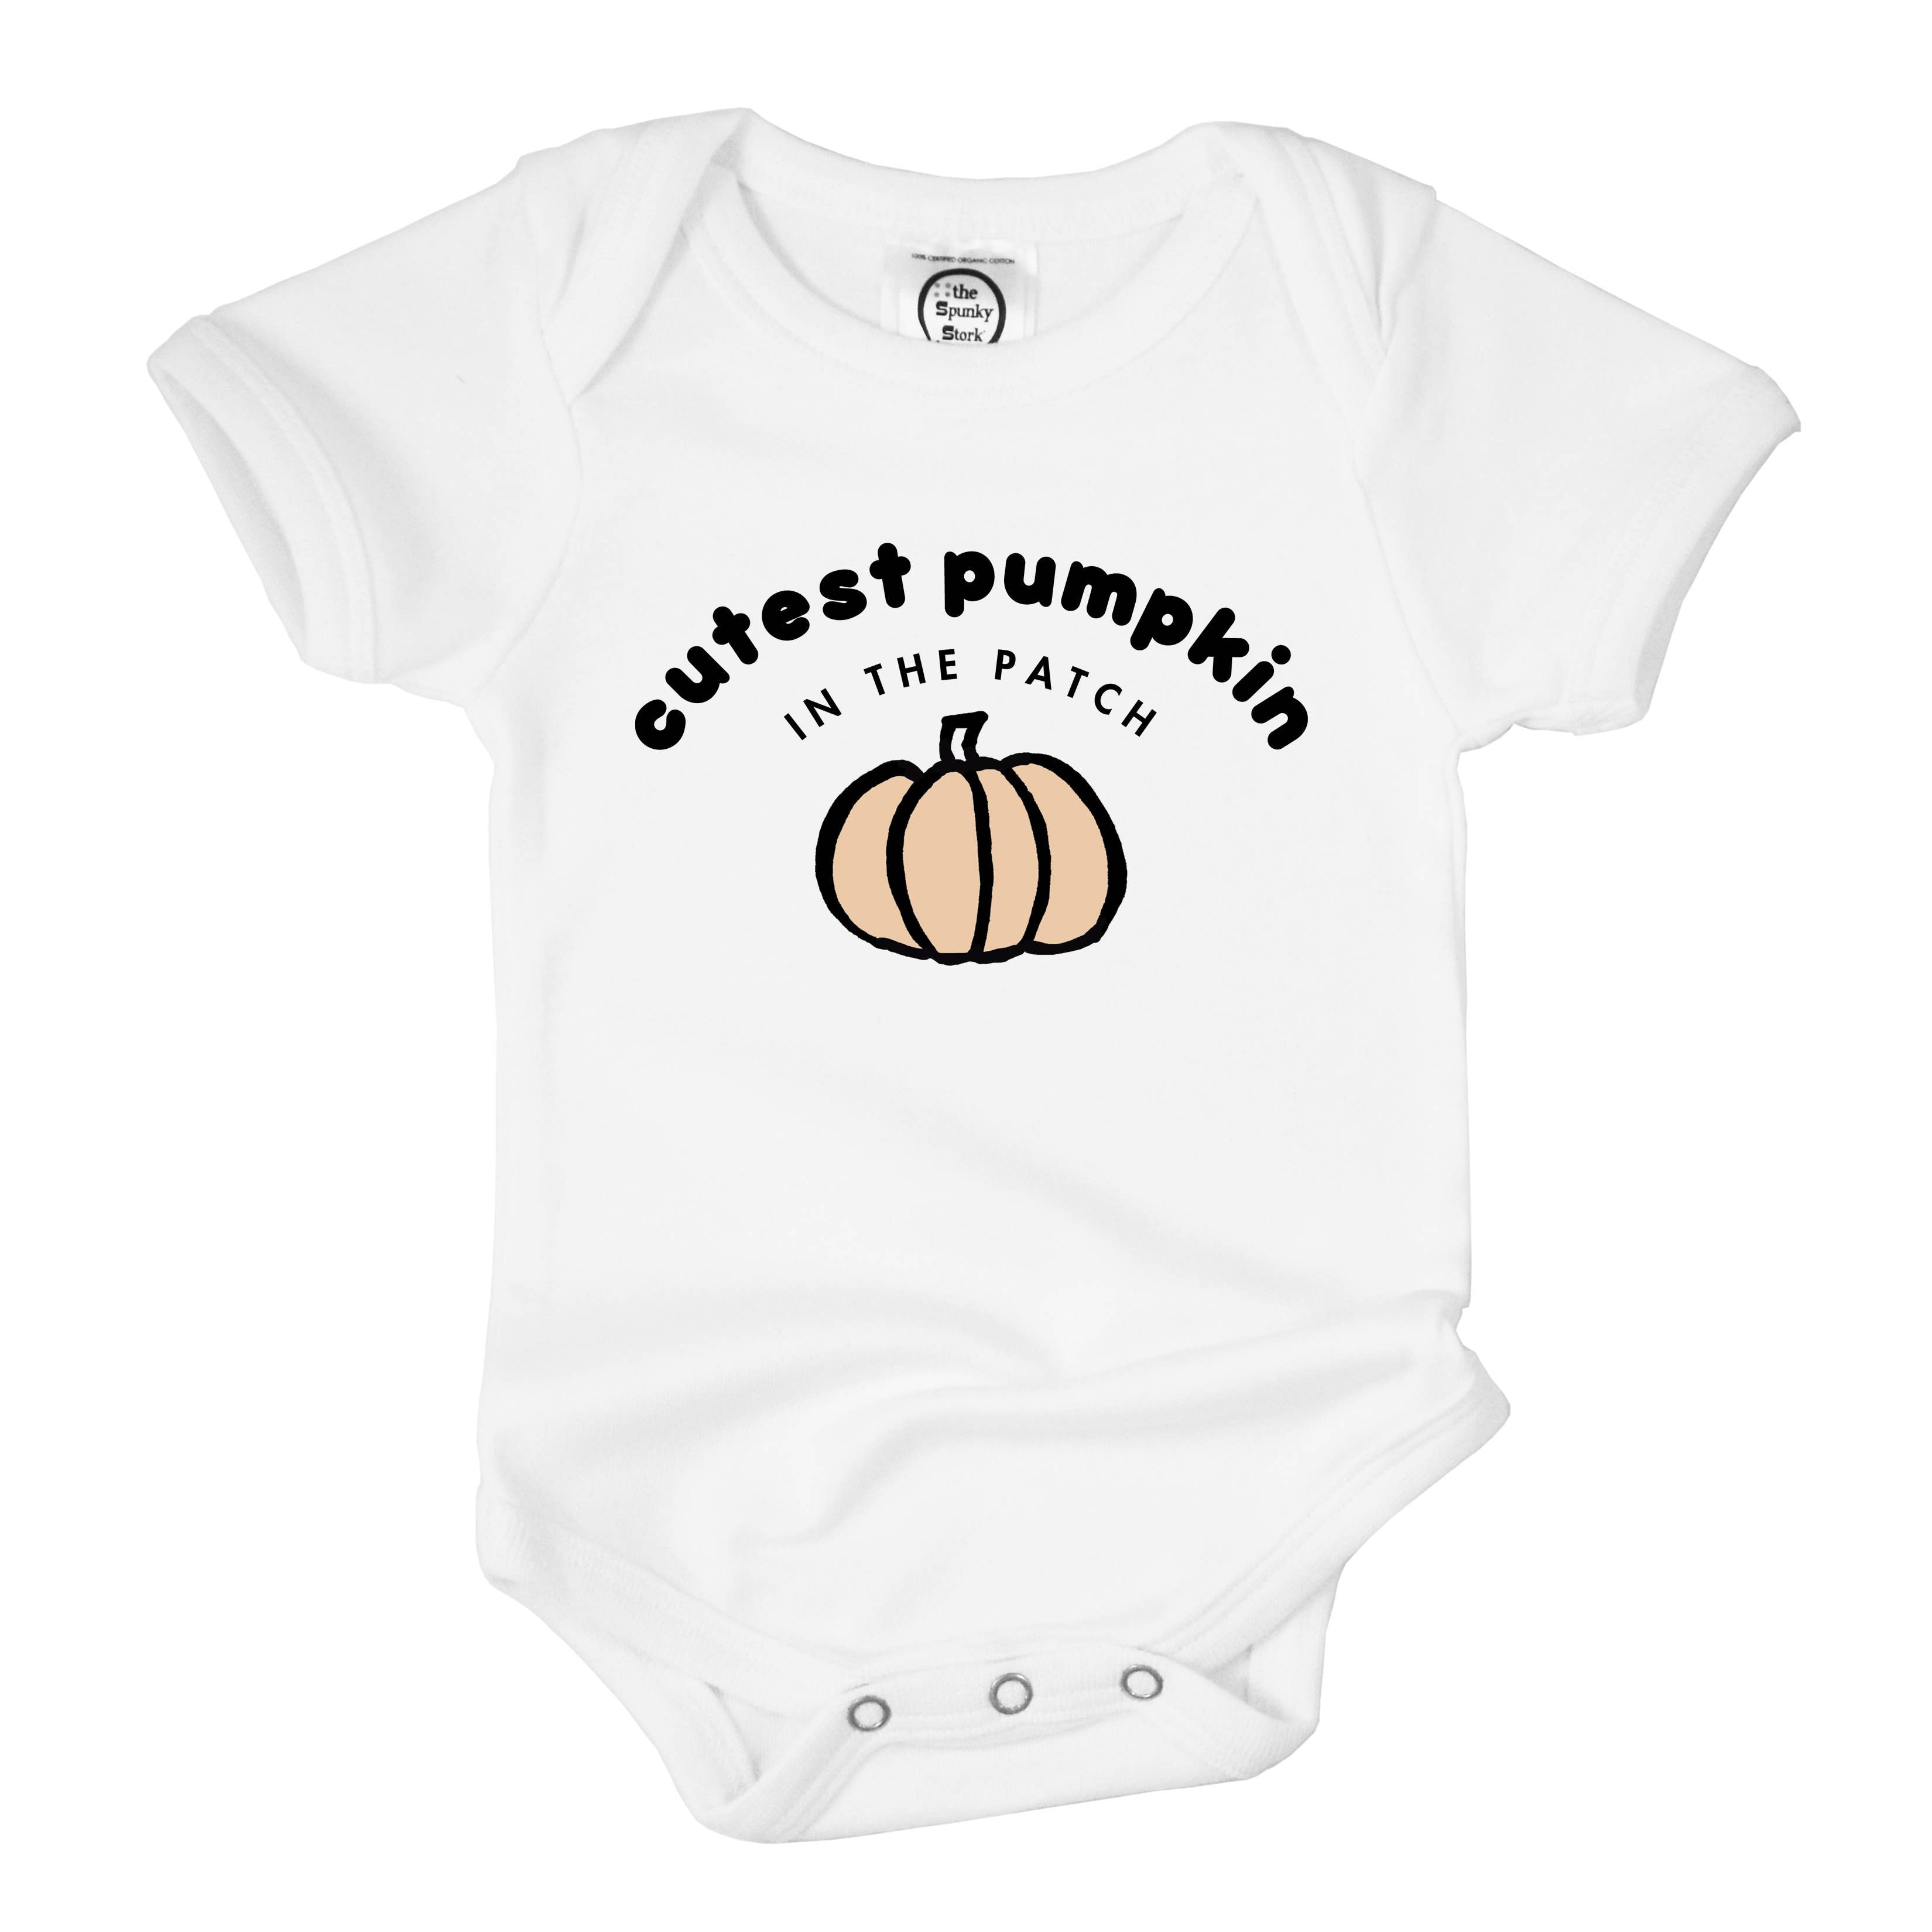 the Spunky Stork - Cutest Pumpkin in the Patch Halloween Baby Toddler Shirt